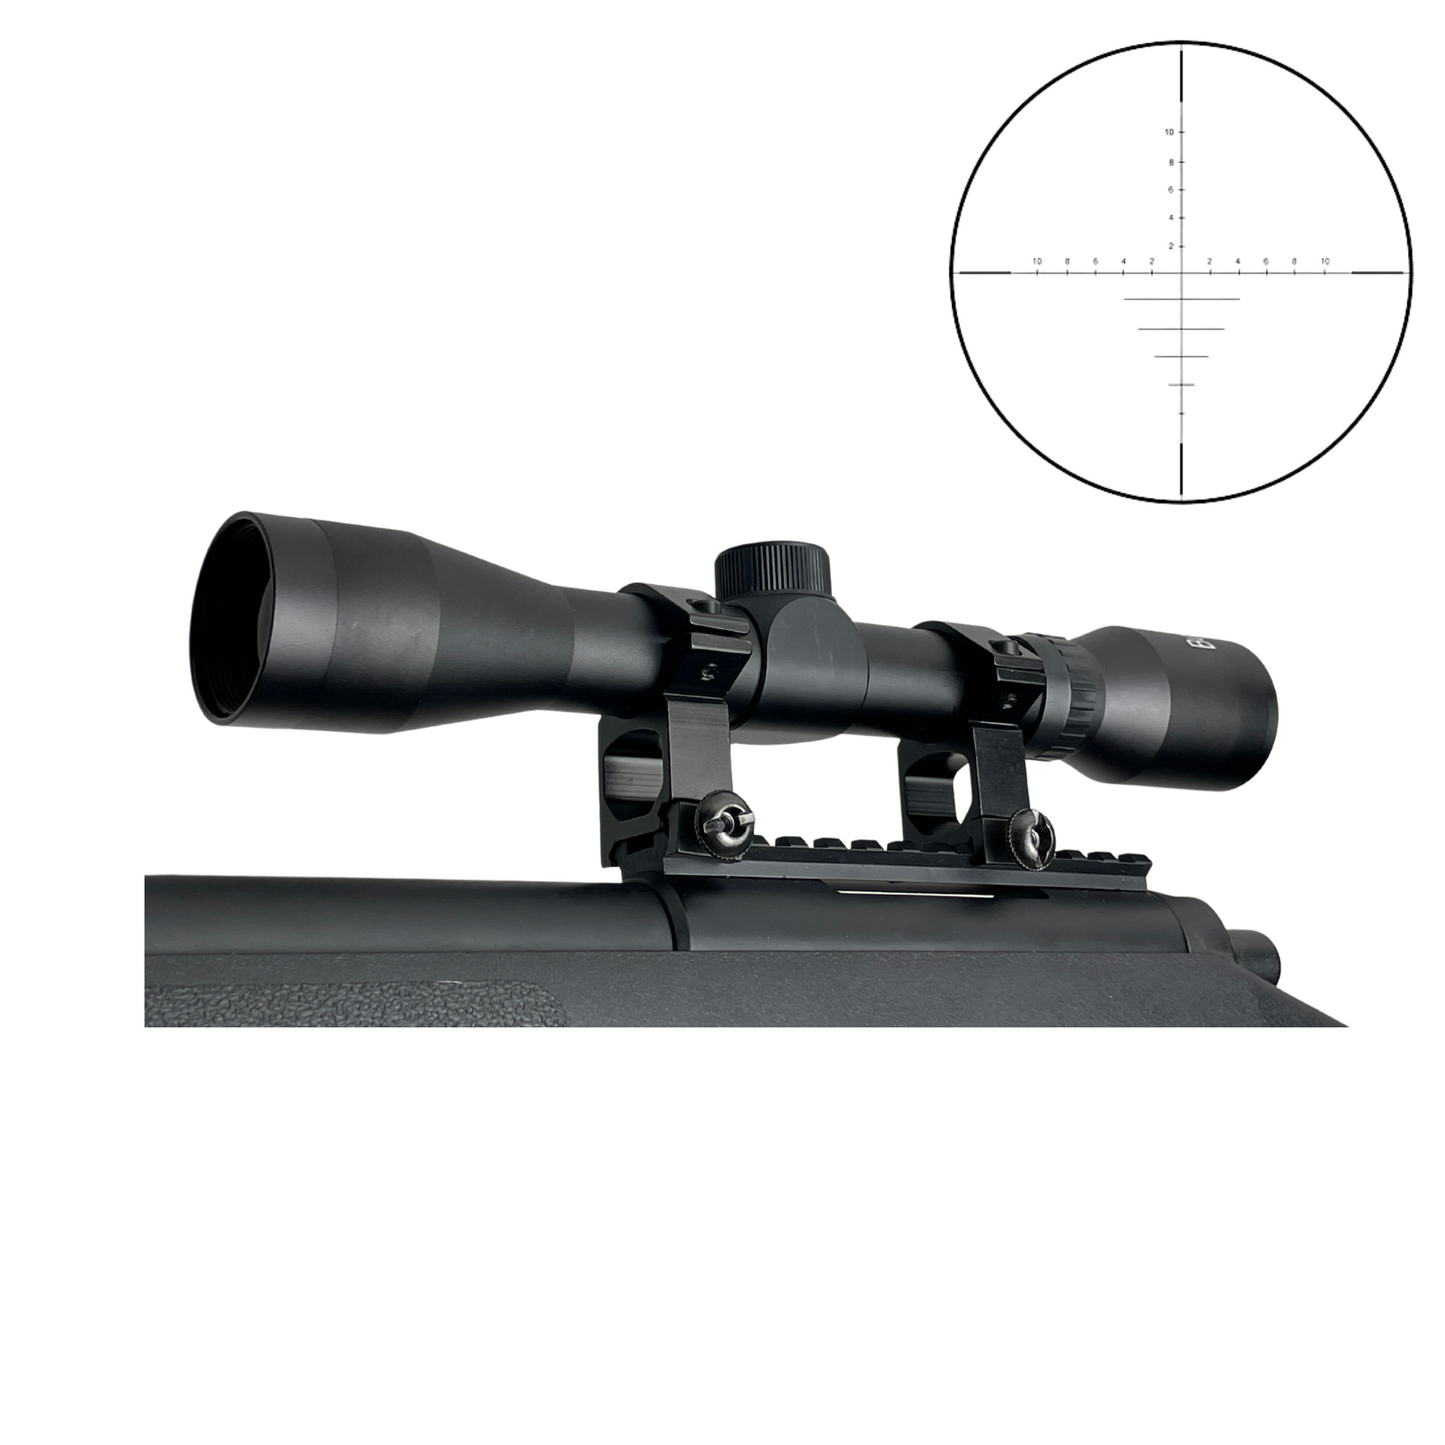 CA 700 Black-Out Tactical Metal Sniper Rifle